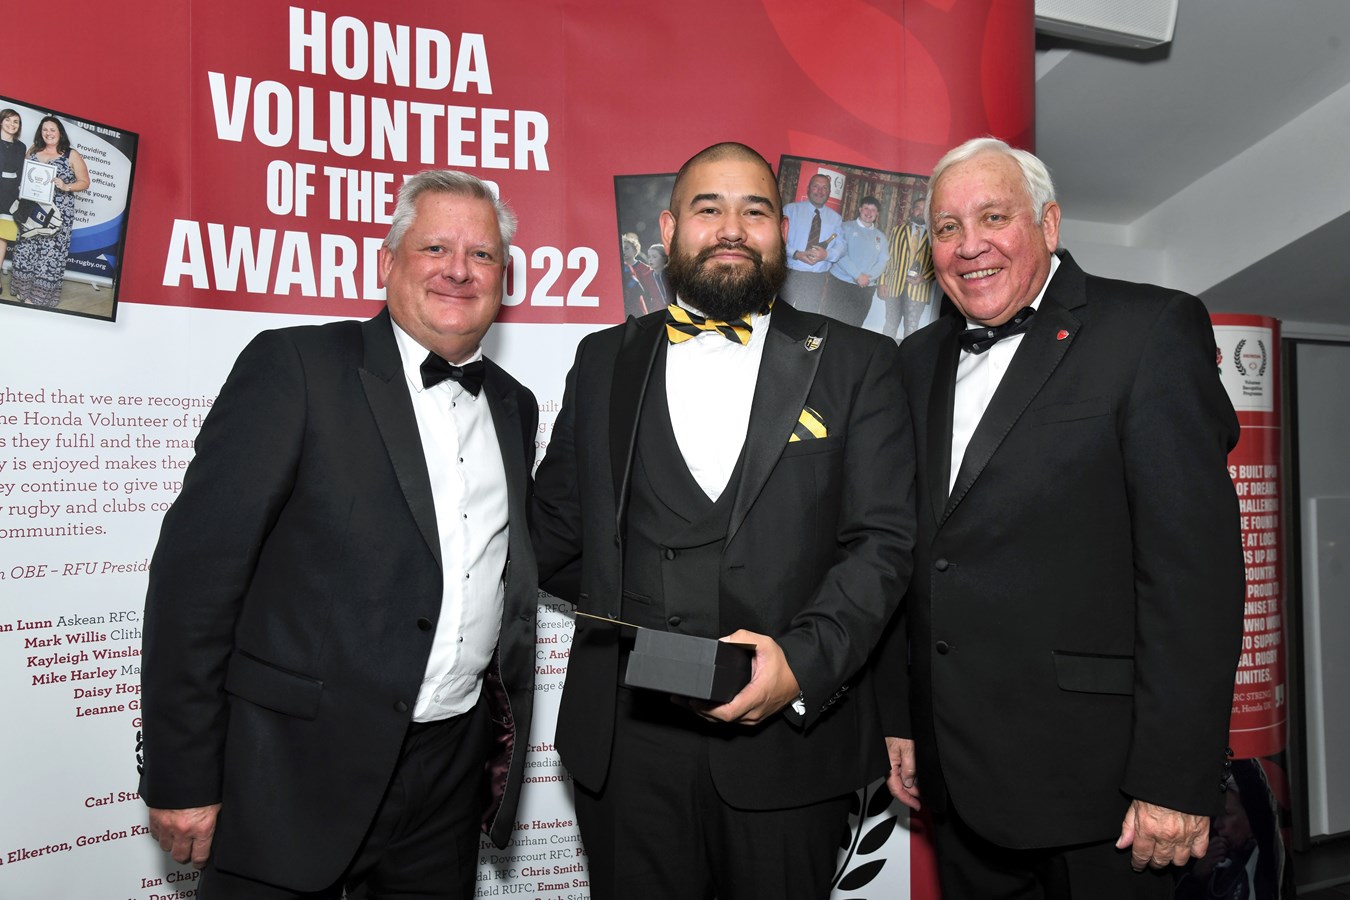 Honda Volunteer of the Year Awards - Steve Morris - Honda UK Head of Power Products, Arthur Crabtree - Award Winner, Rob Briers - RFU Vice President